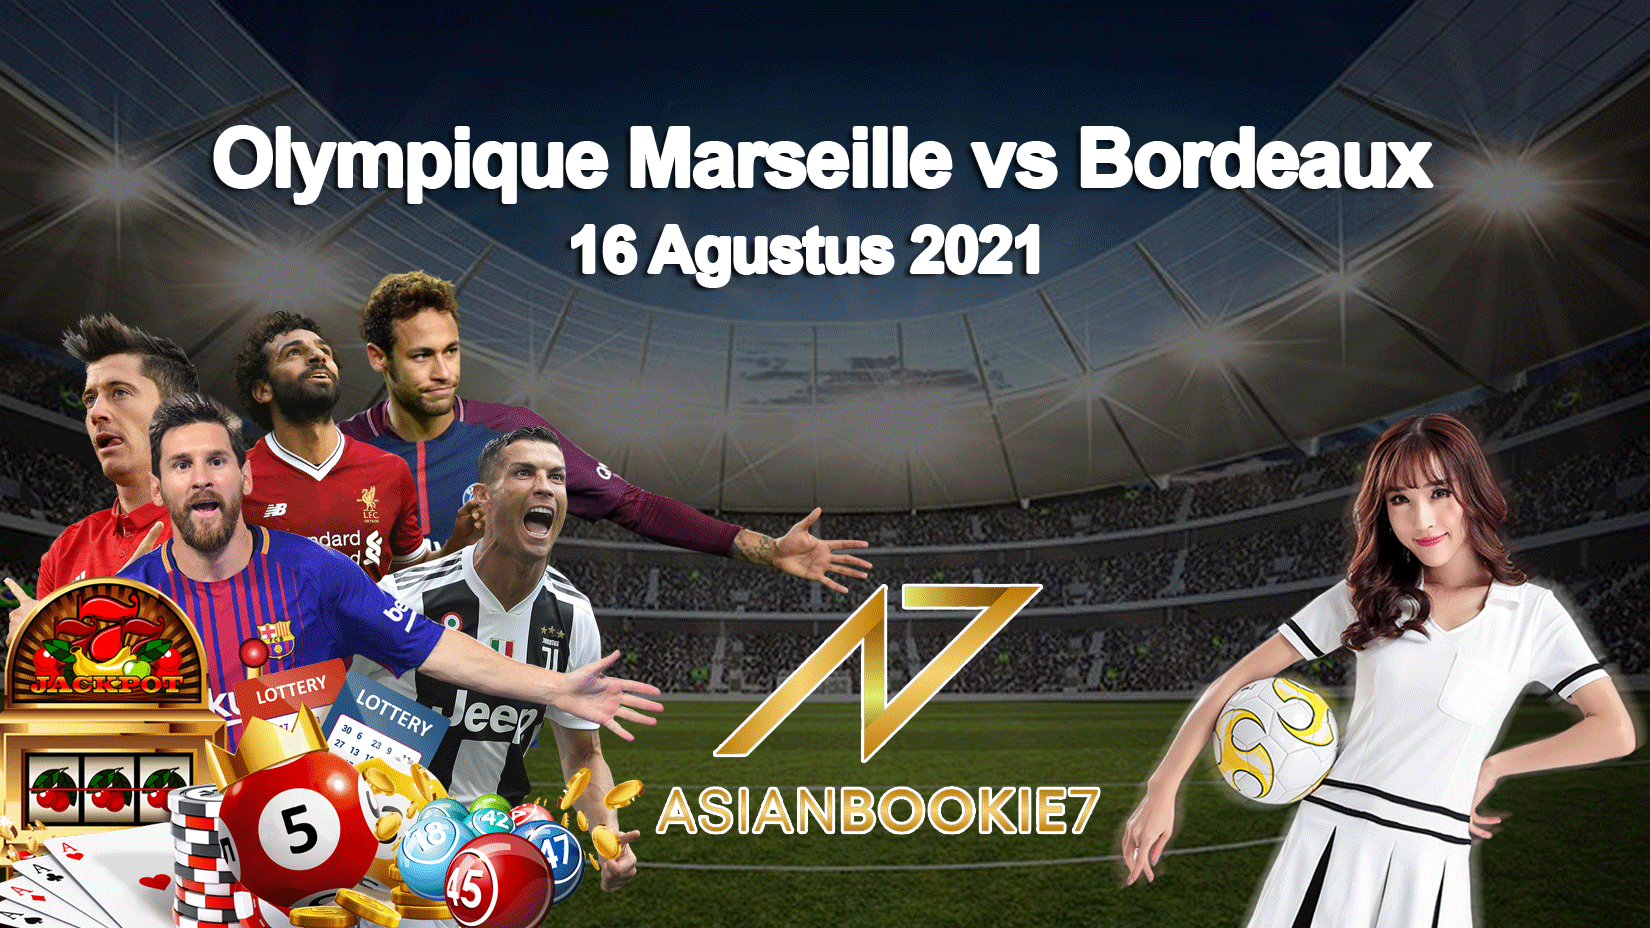 Prediksi Olympique Marseille vs Bordeaux 16 Agustus 2021